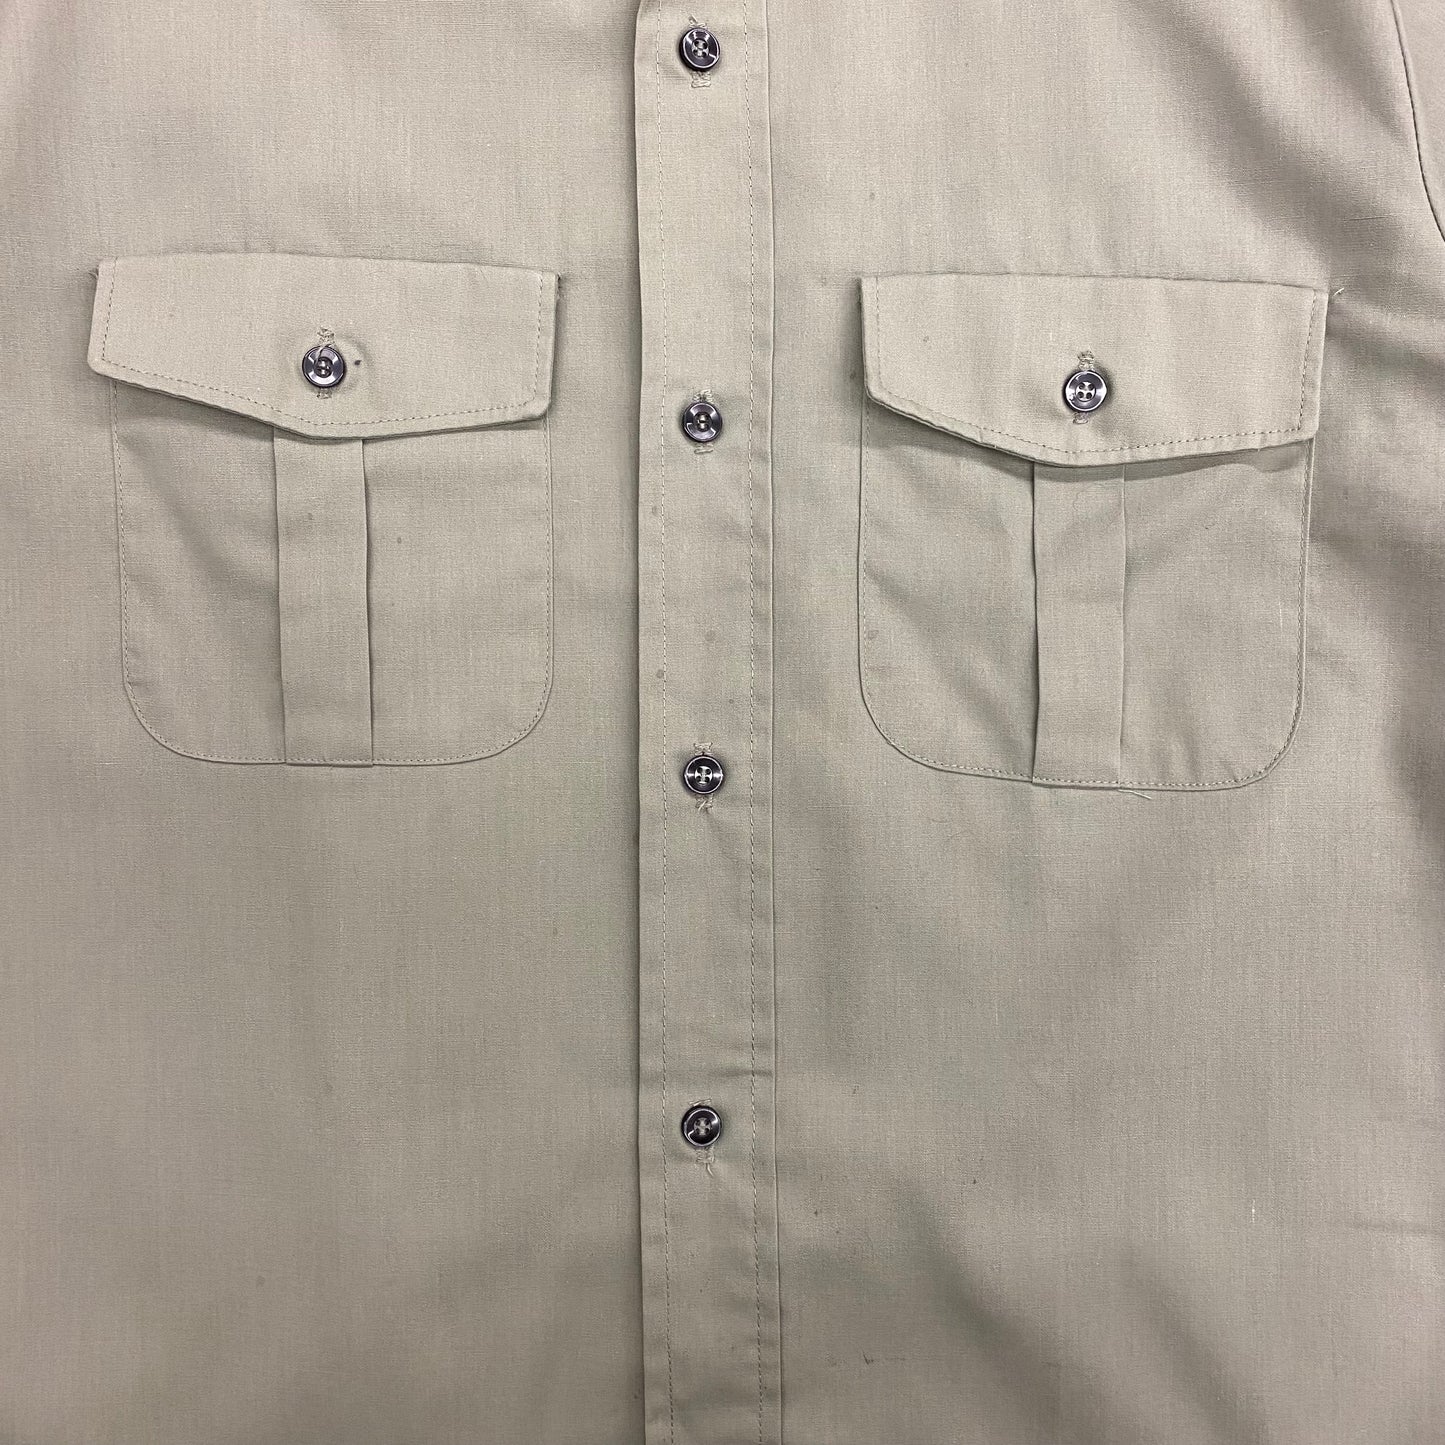 1970s Utica Duxbak "Kamp-it" Button Up Shirt - Size Medium/Large